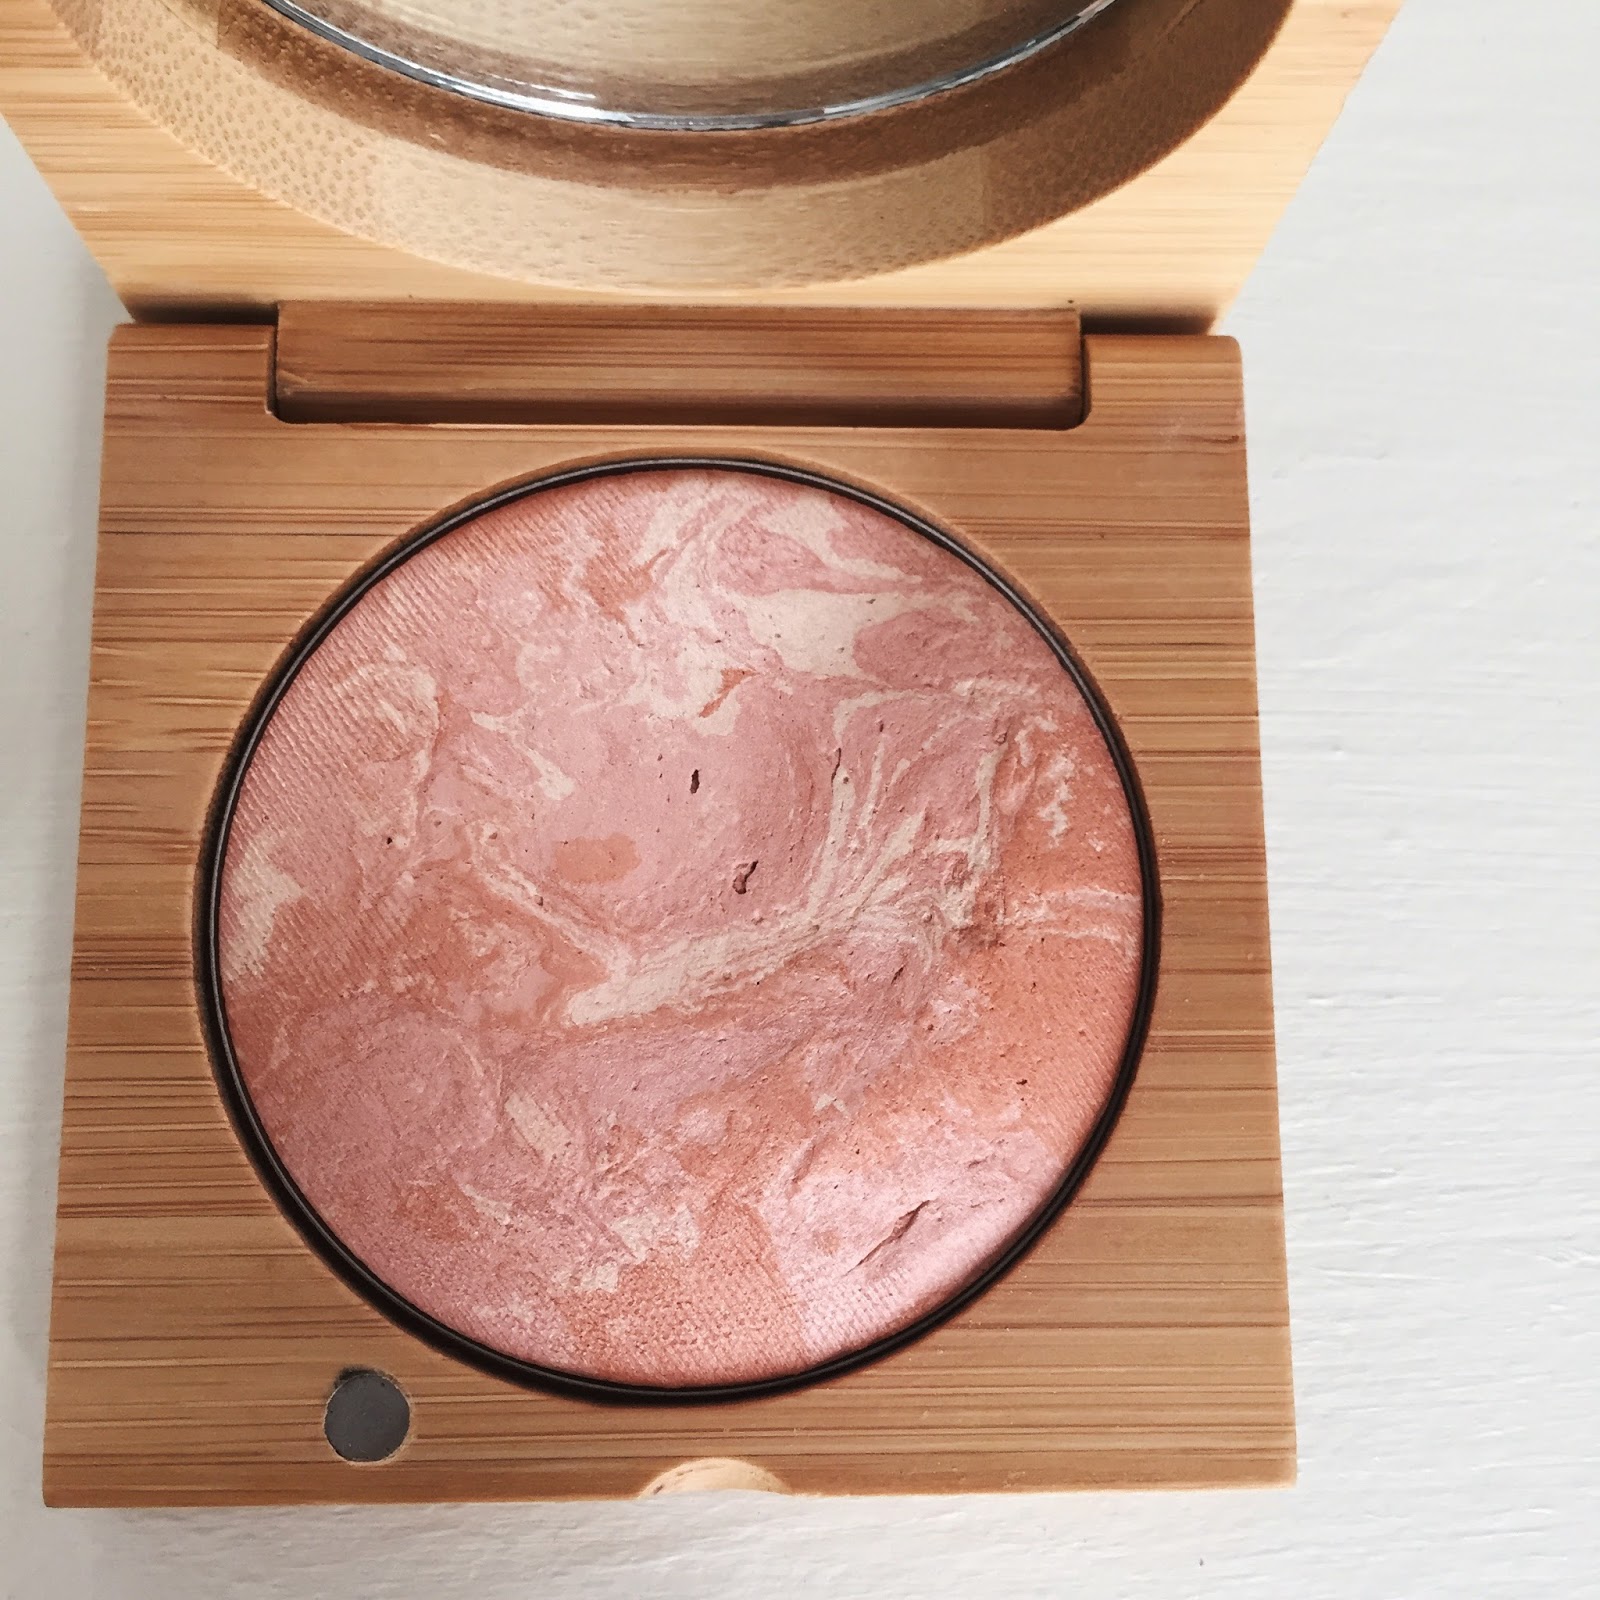 antonym baked blush in peach review organic makeup brand